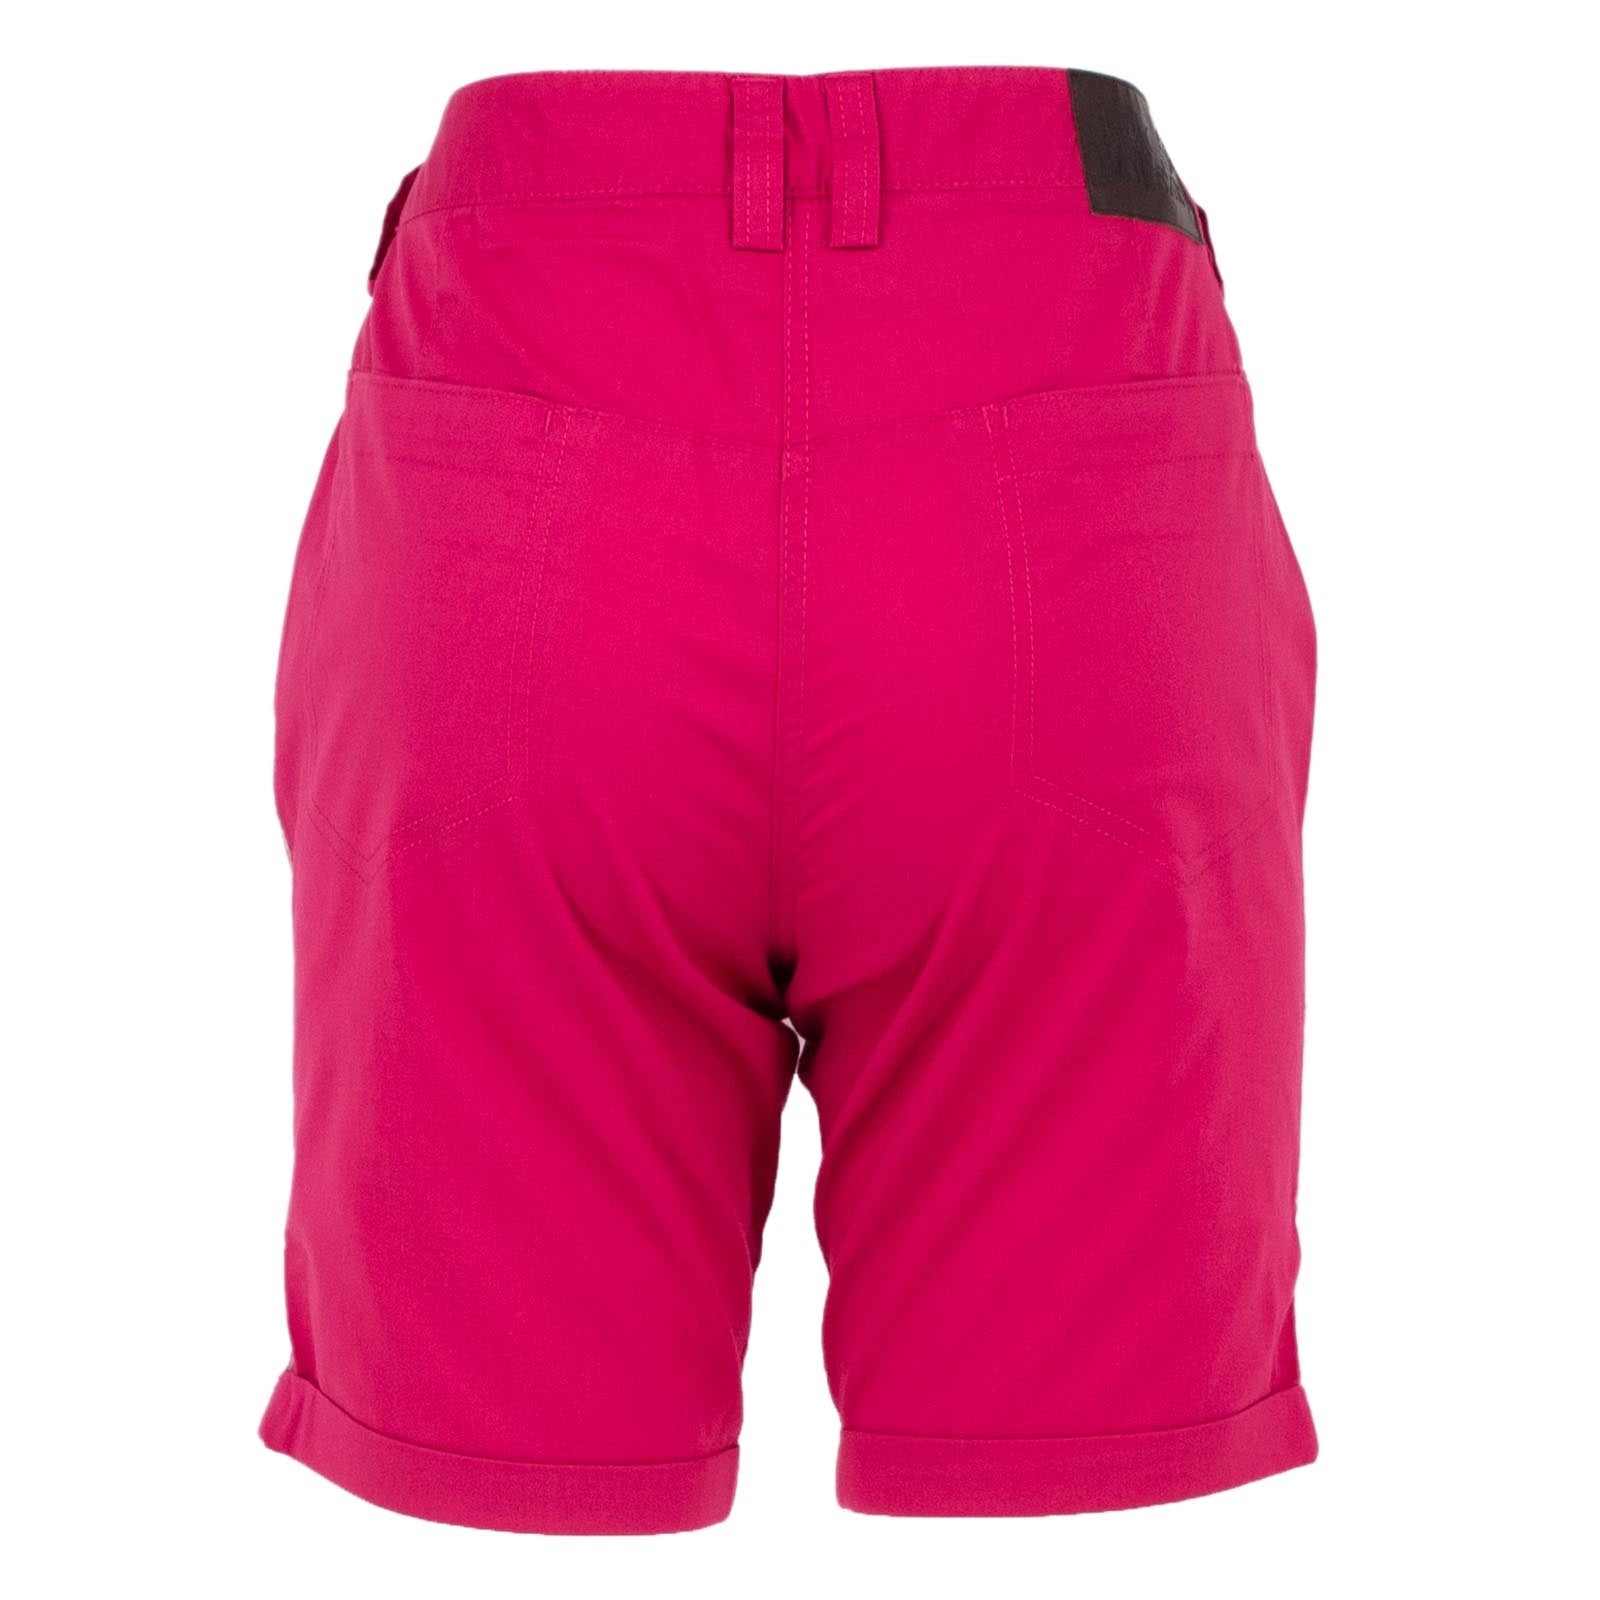 Jack Wolfskin Liberty Shorts Outdoor Hiking Damen pink azalea red 1503151-2081-3